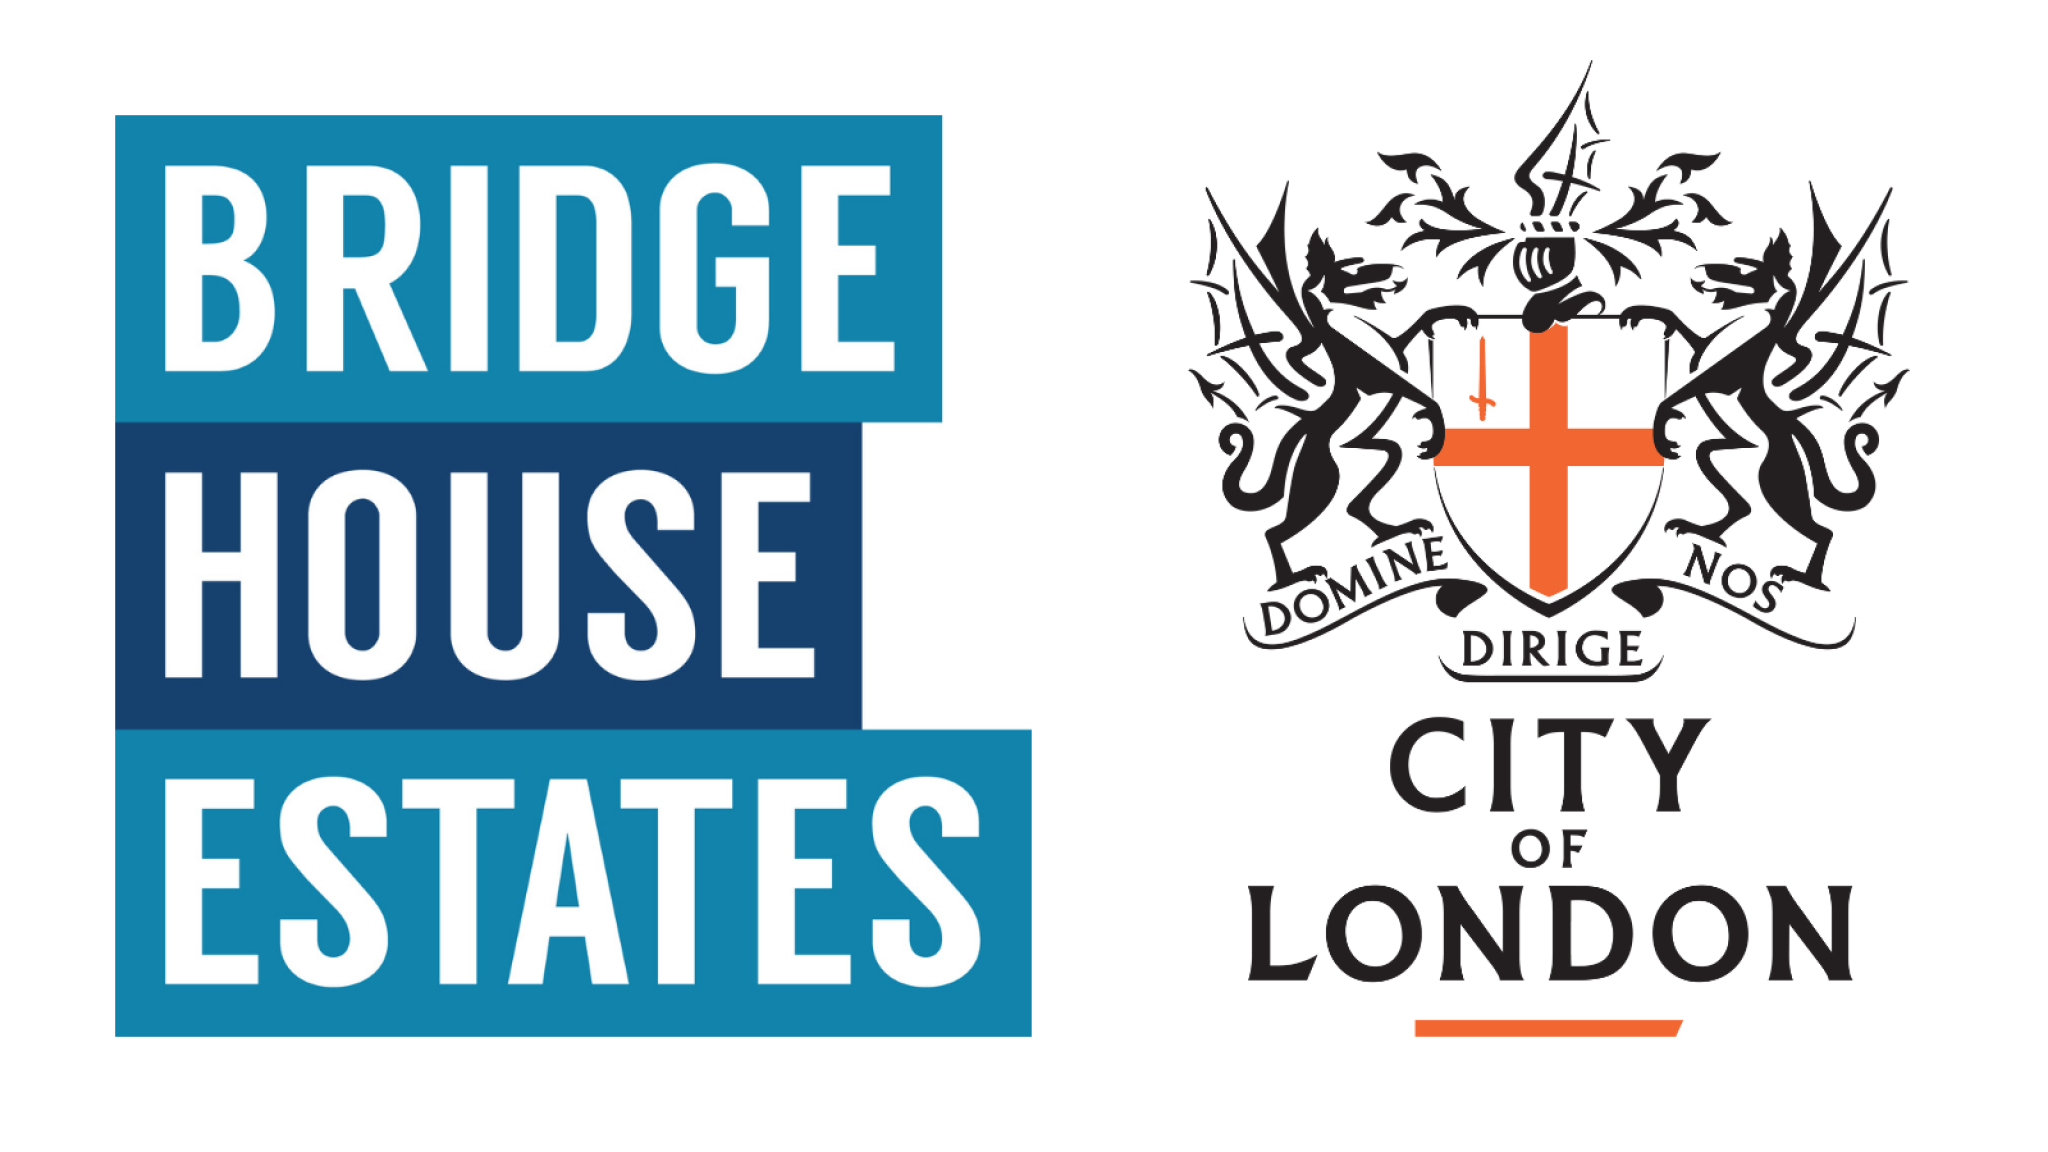 Bridge House Estates and City Corporation logo